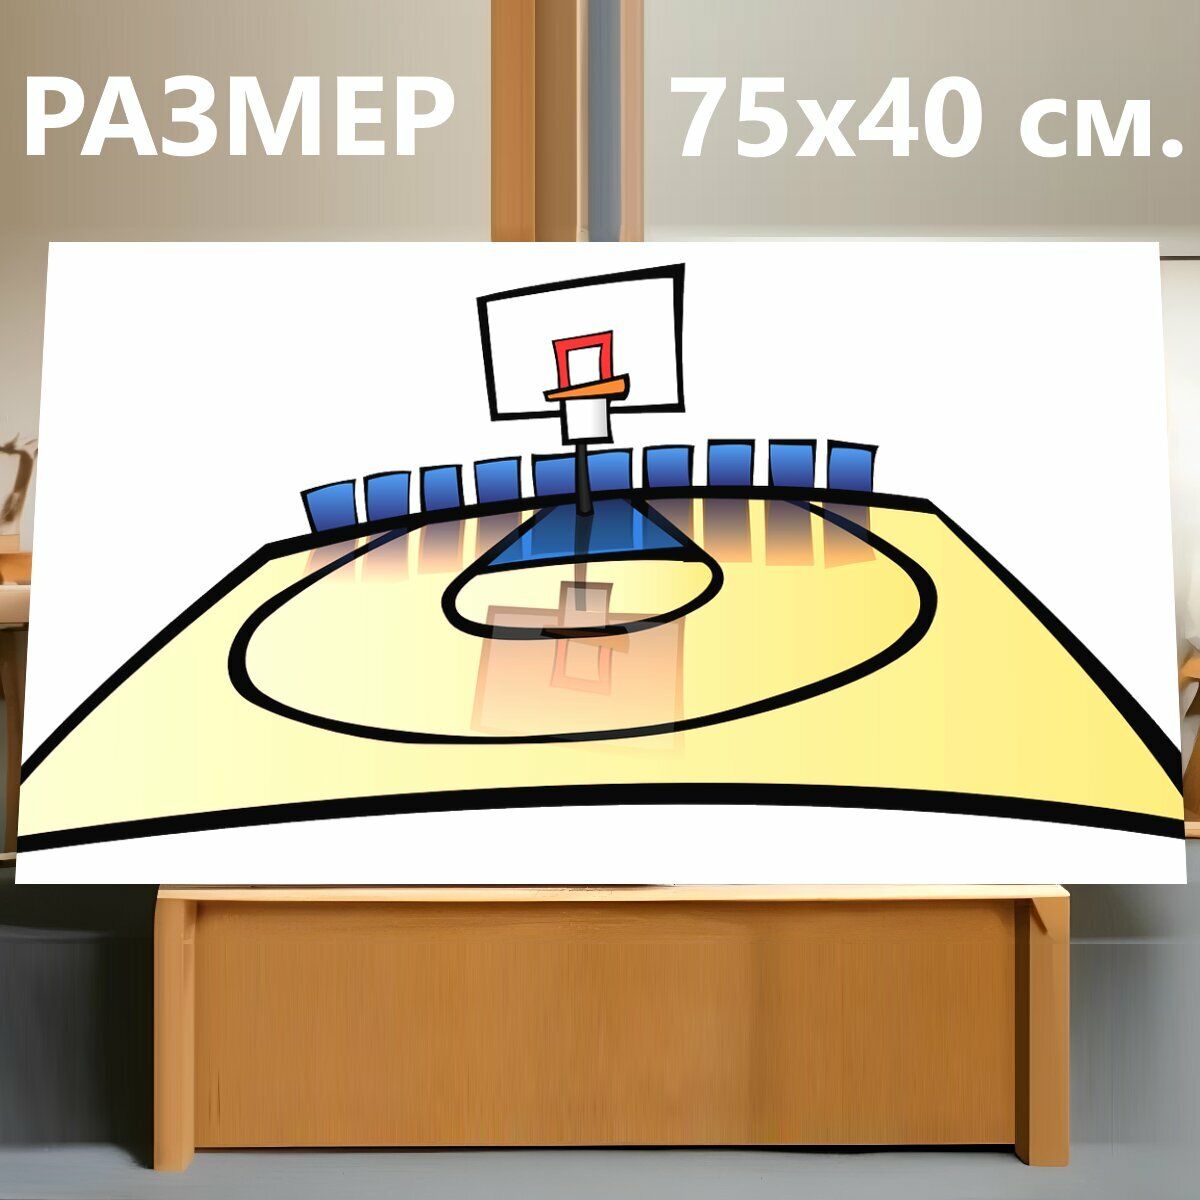 Картина на холсте "Баскетбол, игровая площадка, корт" на подрамнике 75х40 см. для интерьера